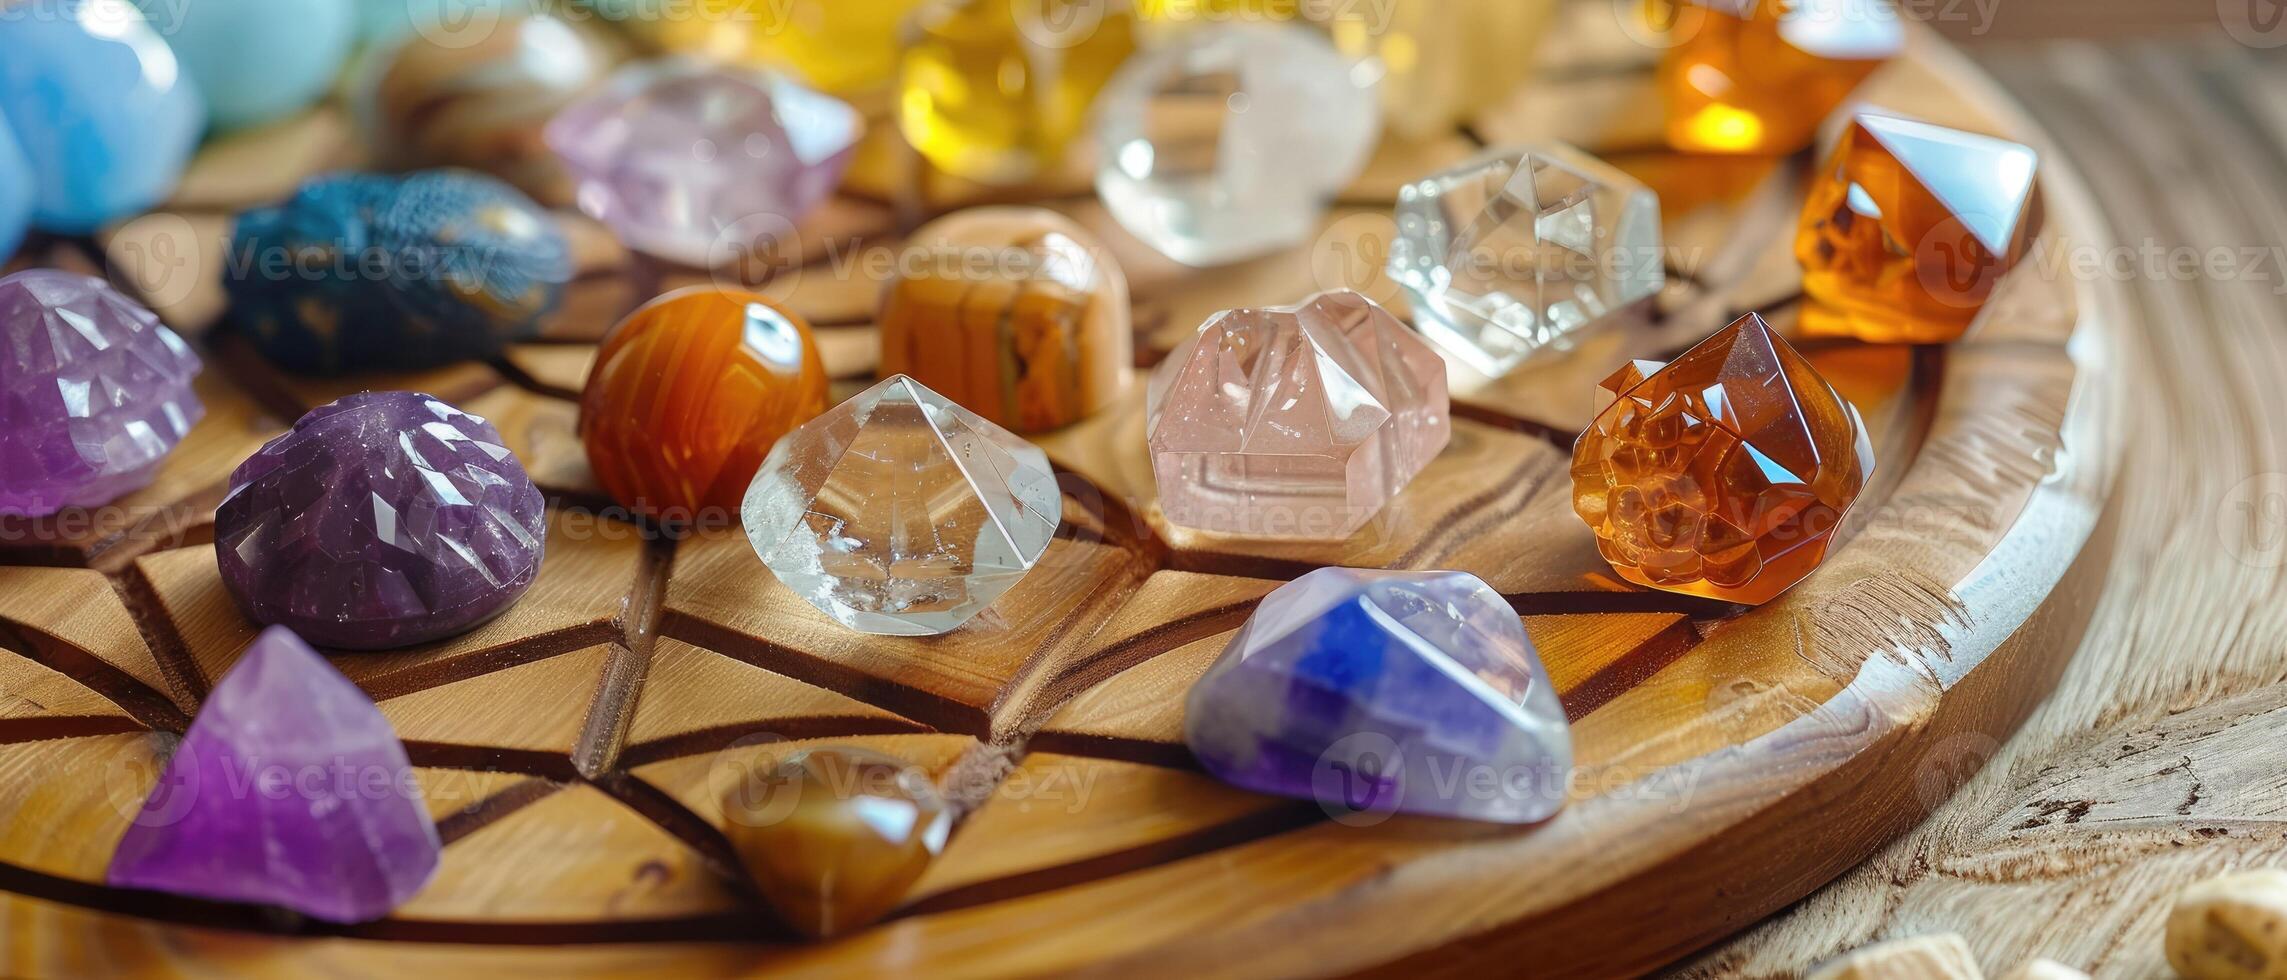 minerais, cristais, semi precioso pedras preciosas, Magia ainda vida para cristal energia cura, foto